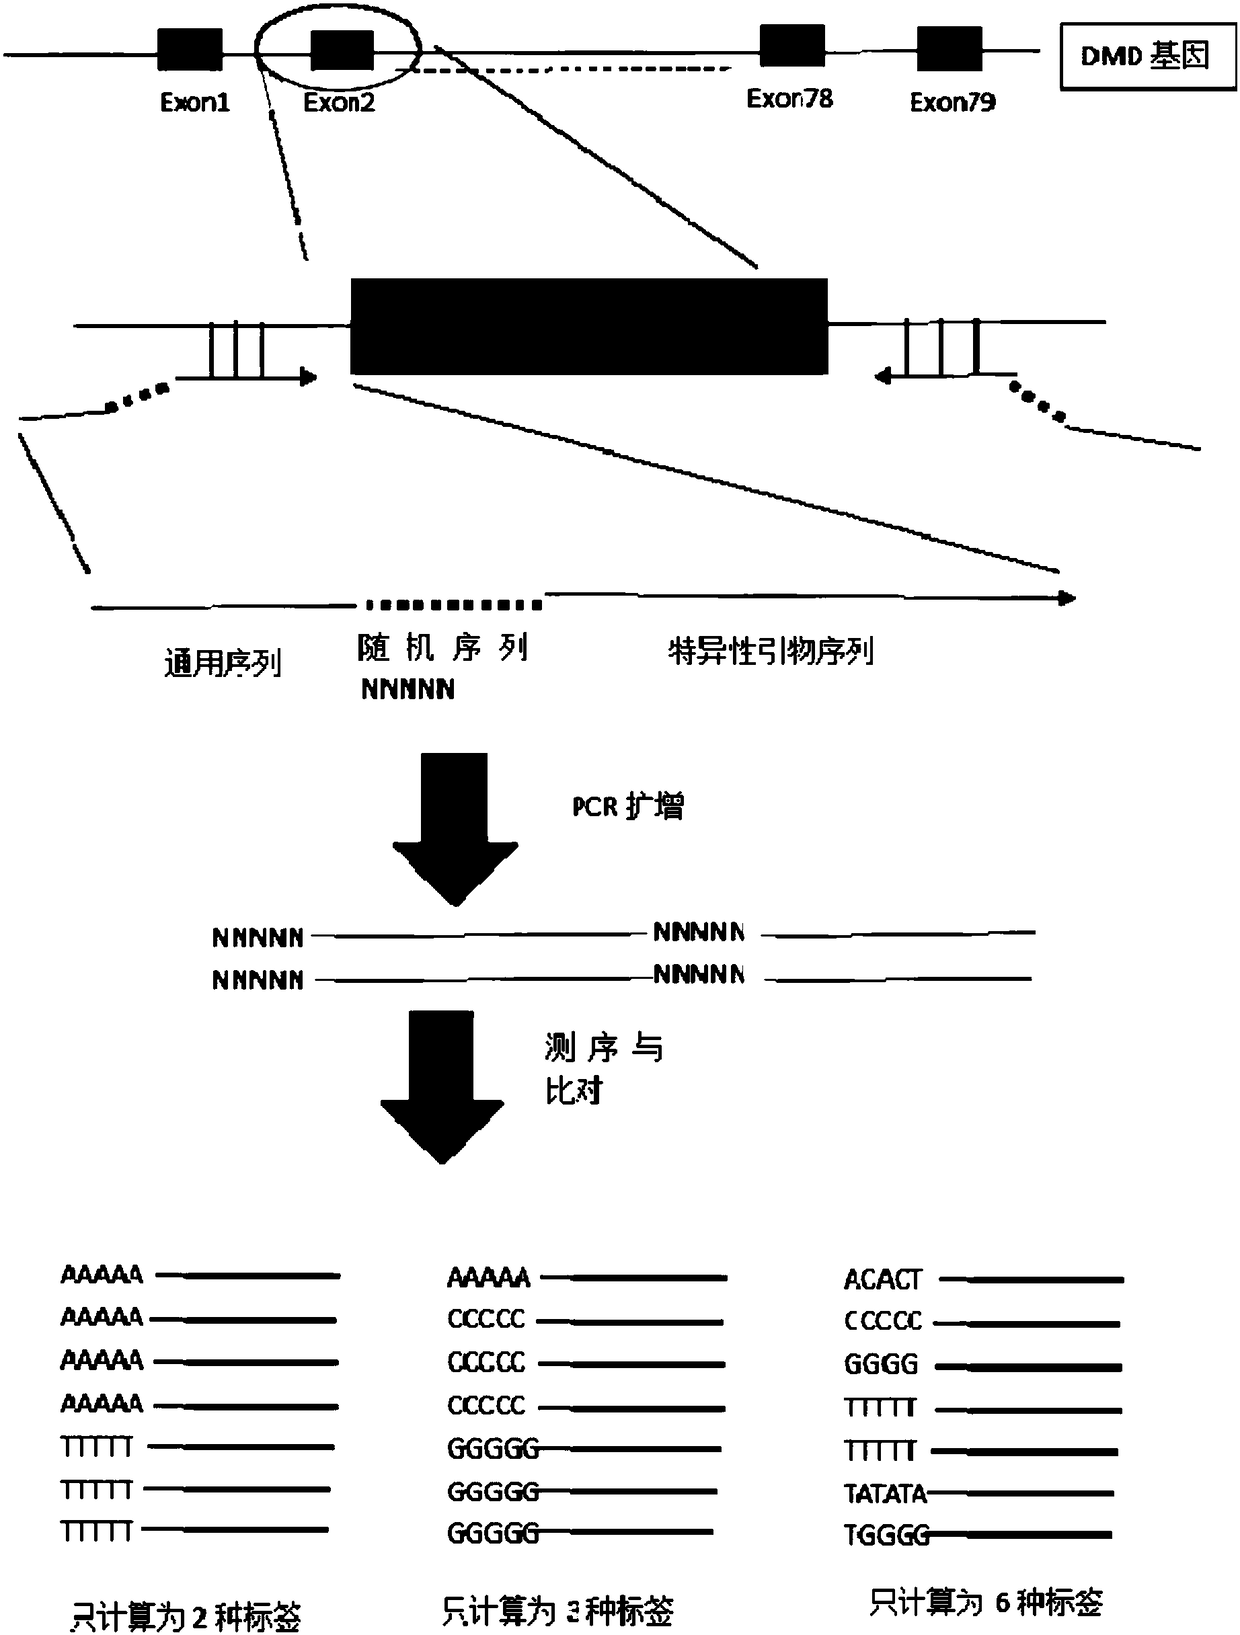 Method for detecting heterozygous dmd gene deletion and primers used